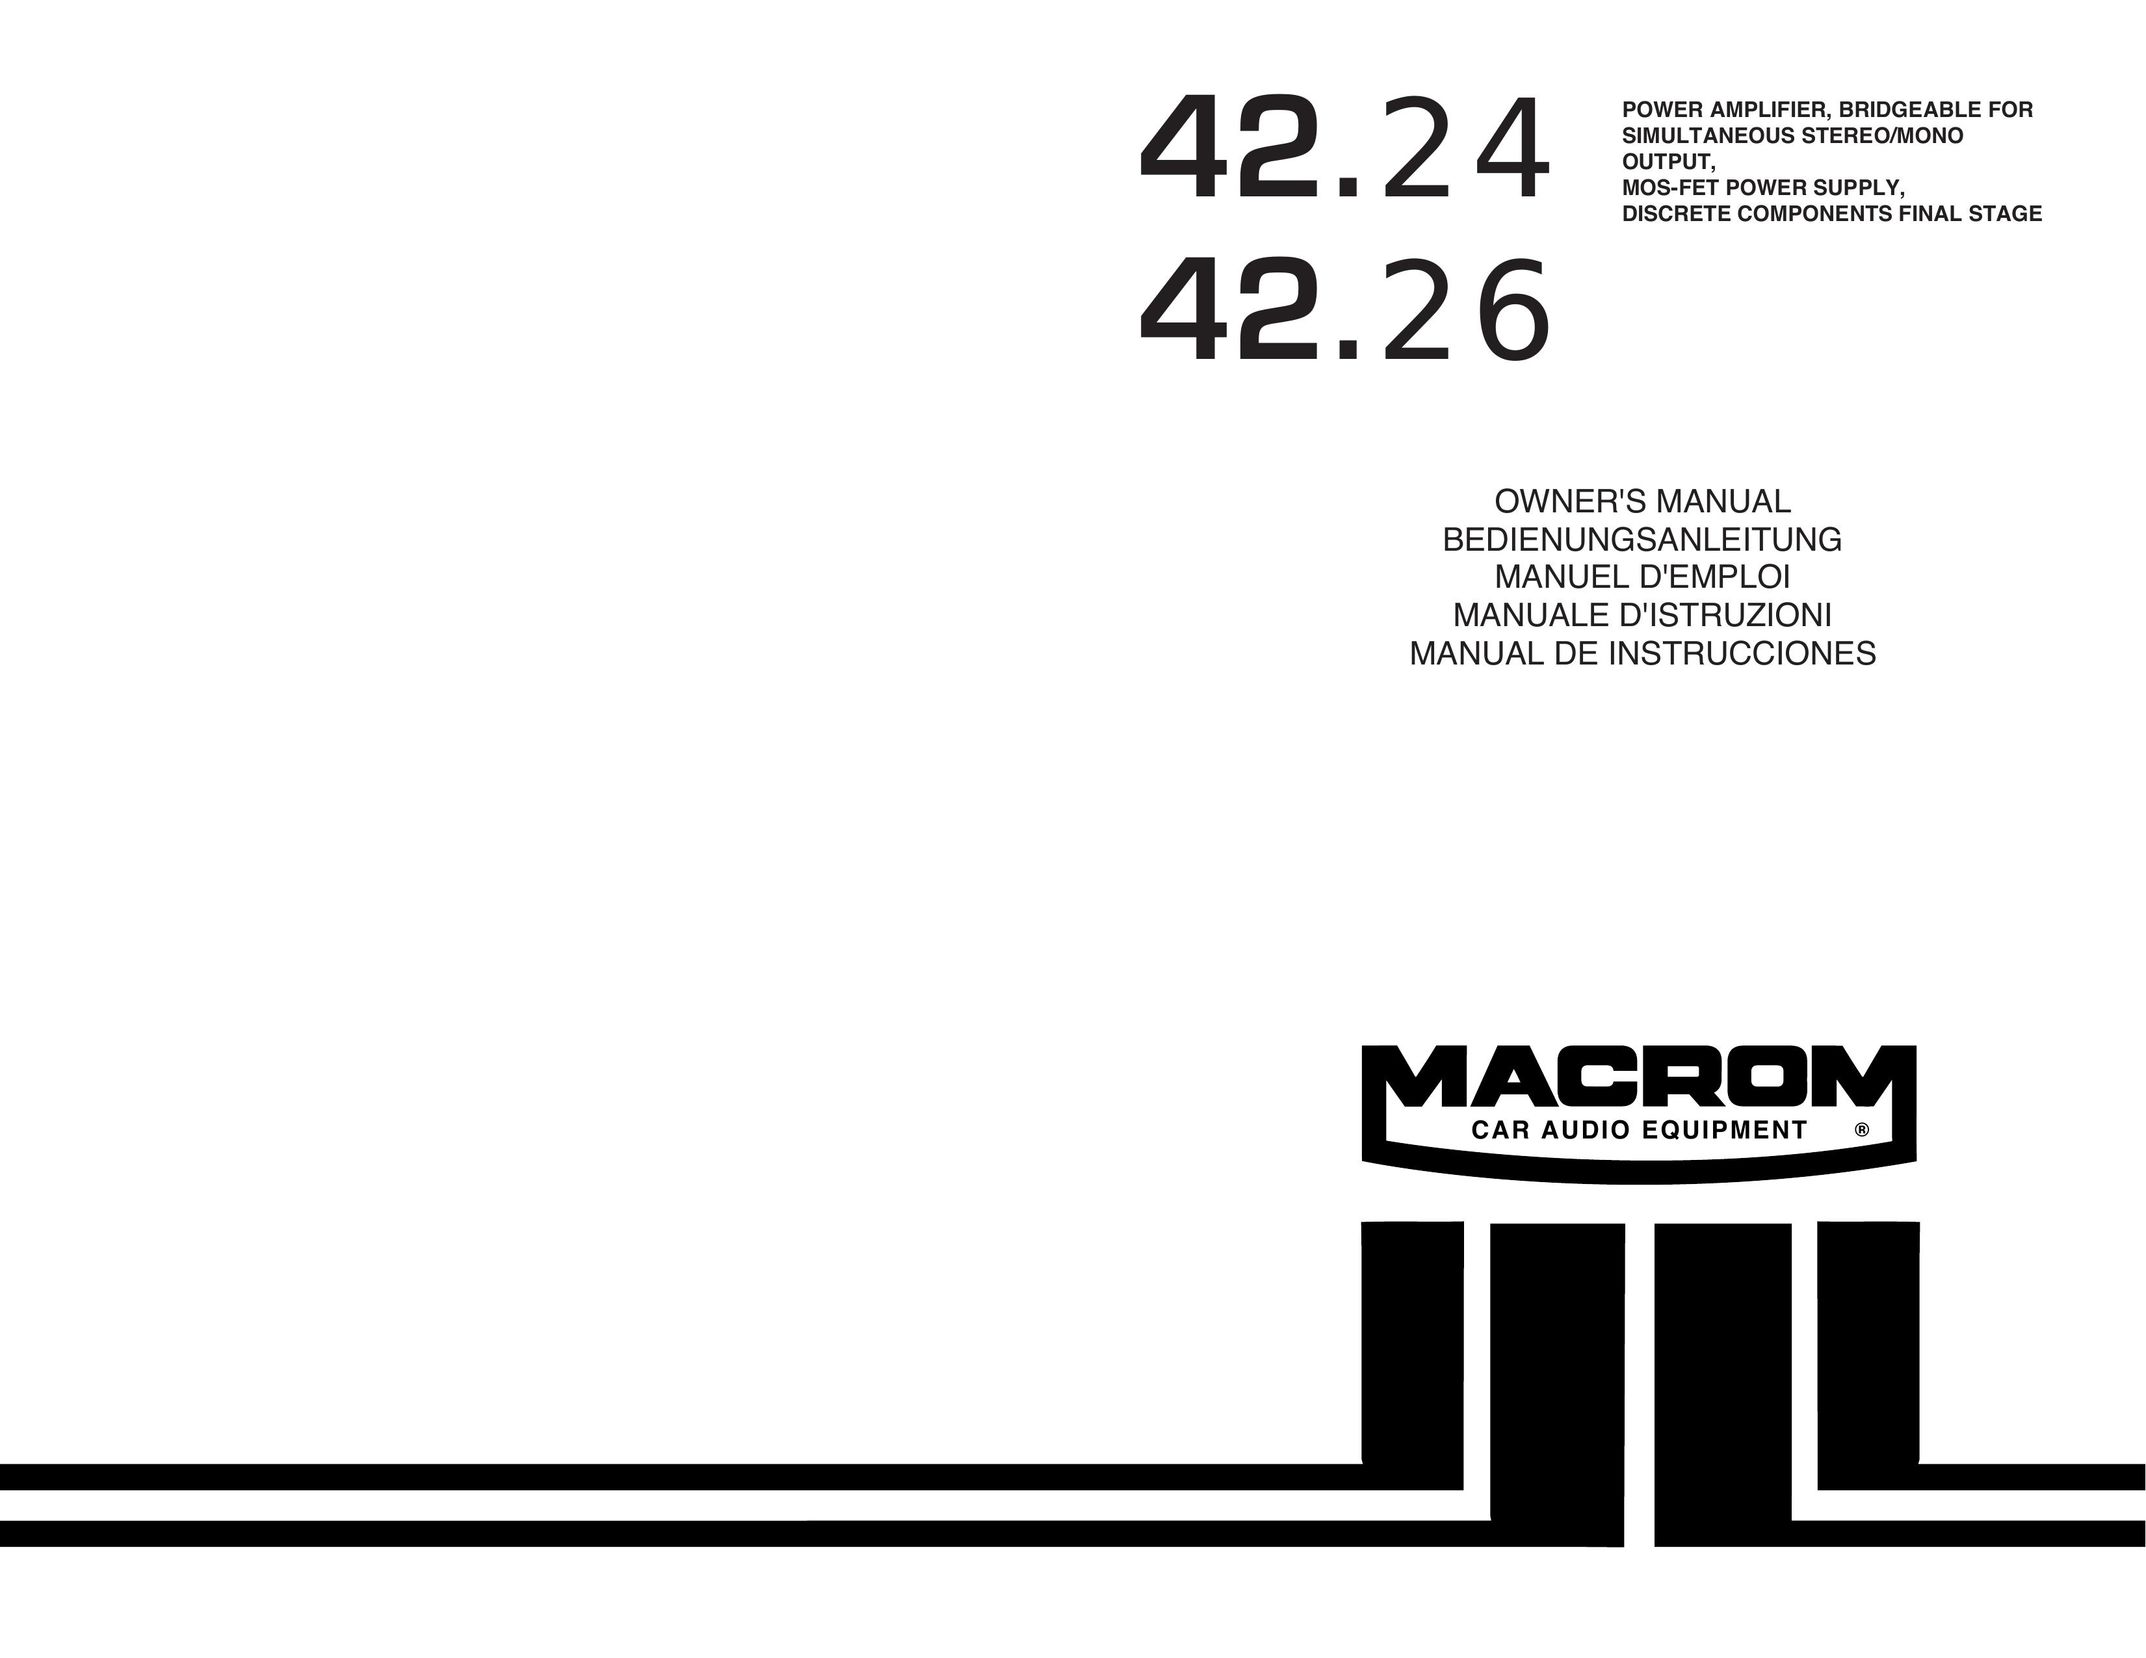 Macrom 42.24 Stereo Amplifier User Manual